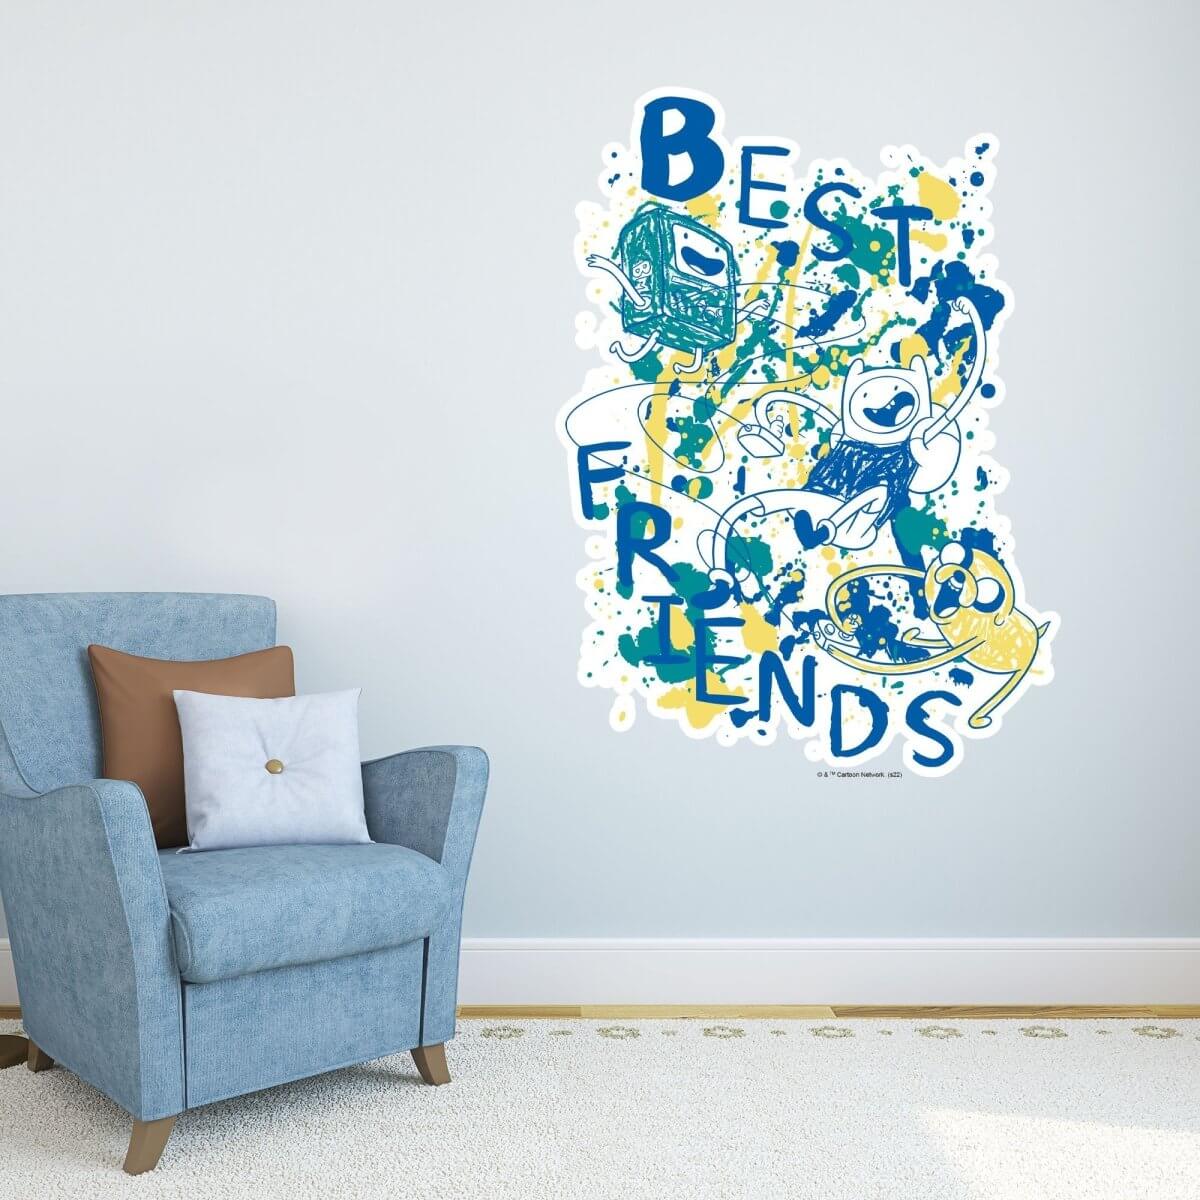 Kismet Decals Adventure Time Best Friends Licensed Wall Sticker - Easy DIY Home & Kids Room Decor Wall Decal Art - Kismet Decals